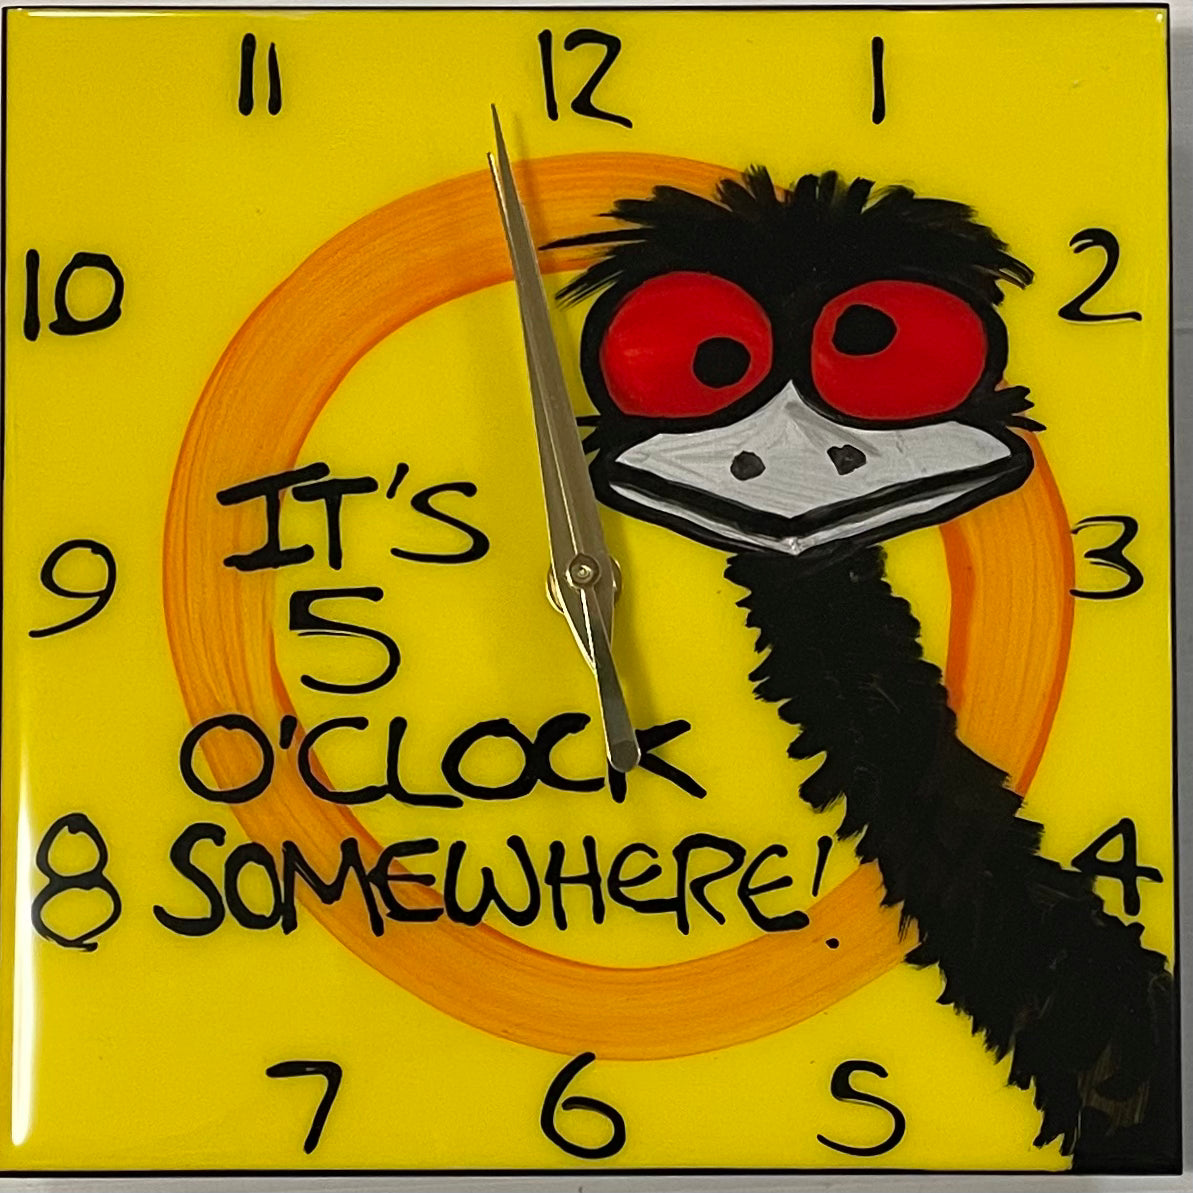 Emu clocks (made to order).